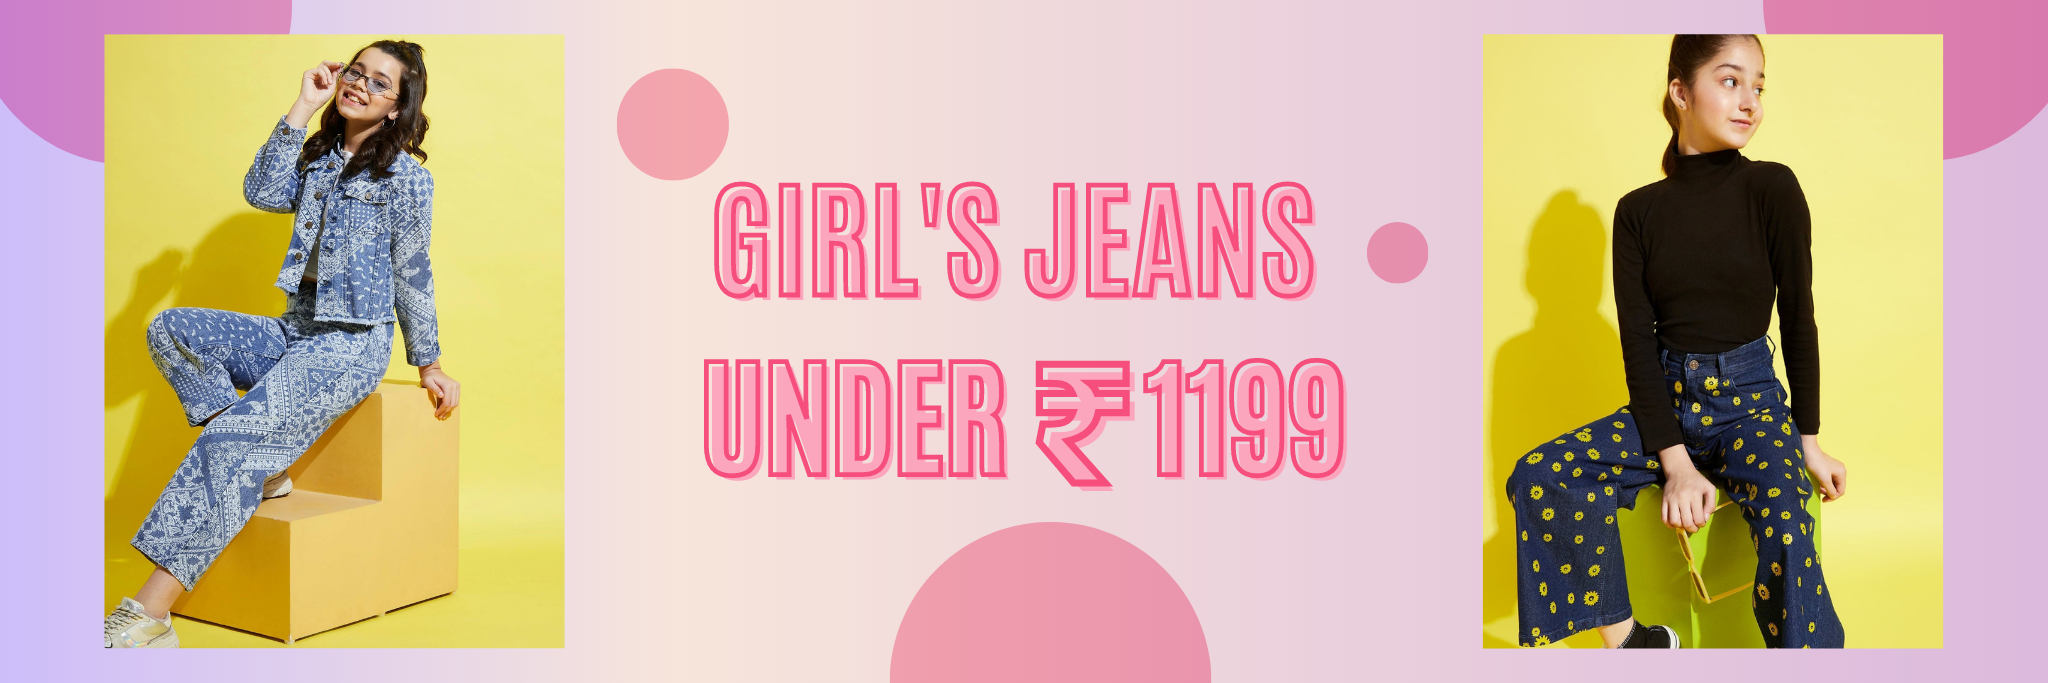 Girl's Jeans Under 1199